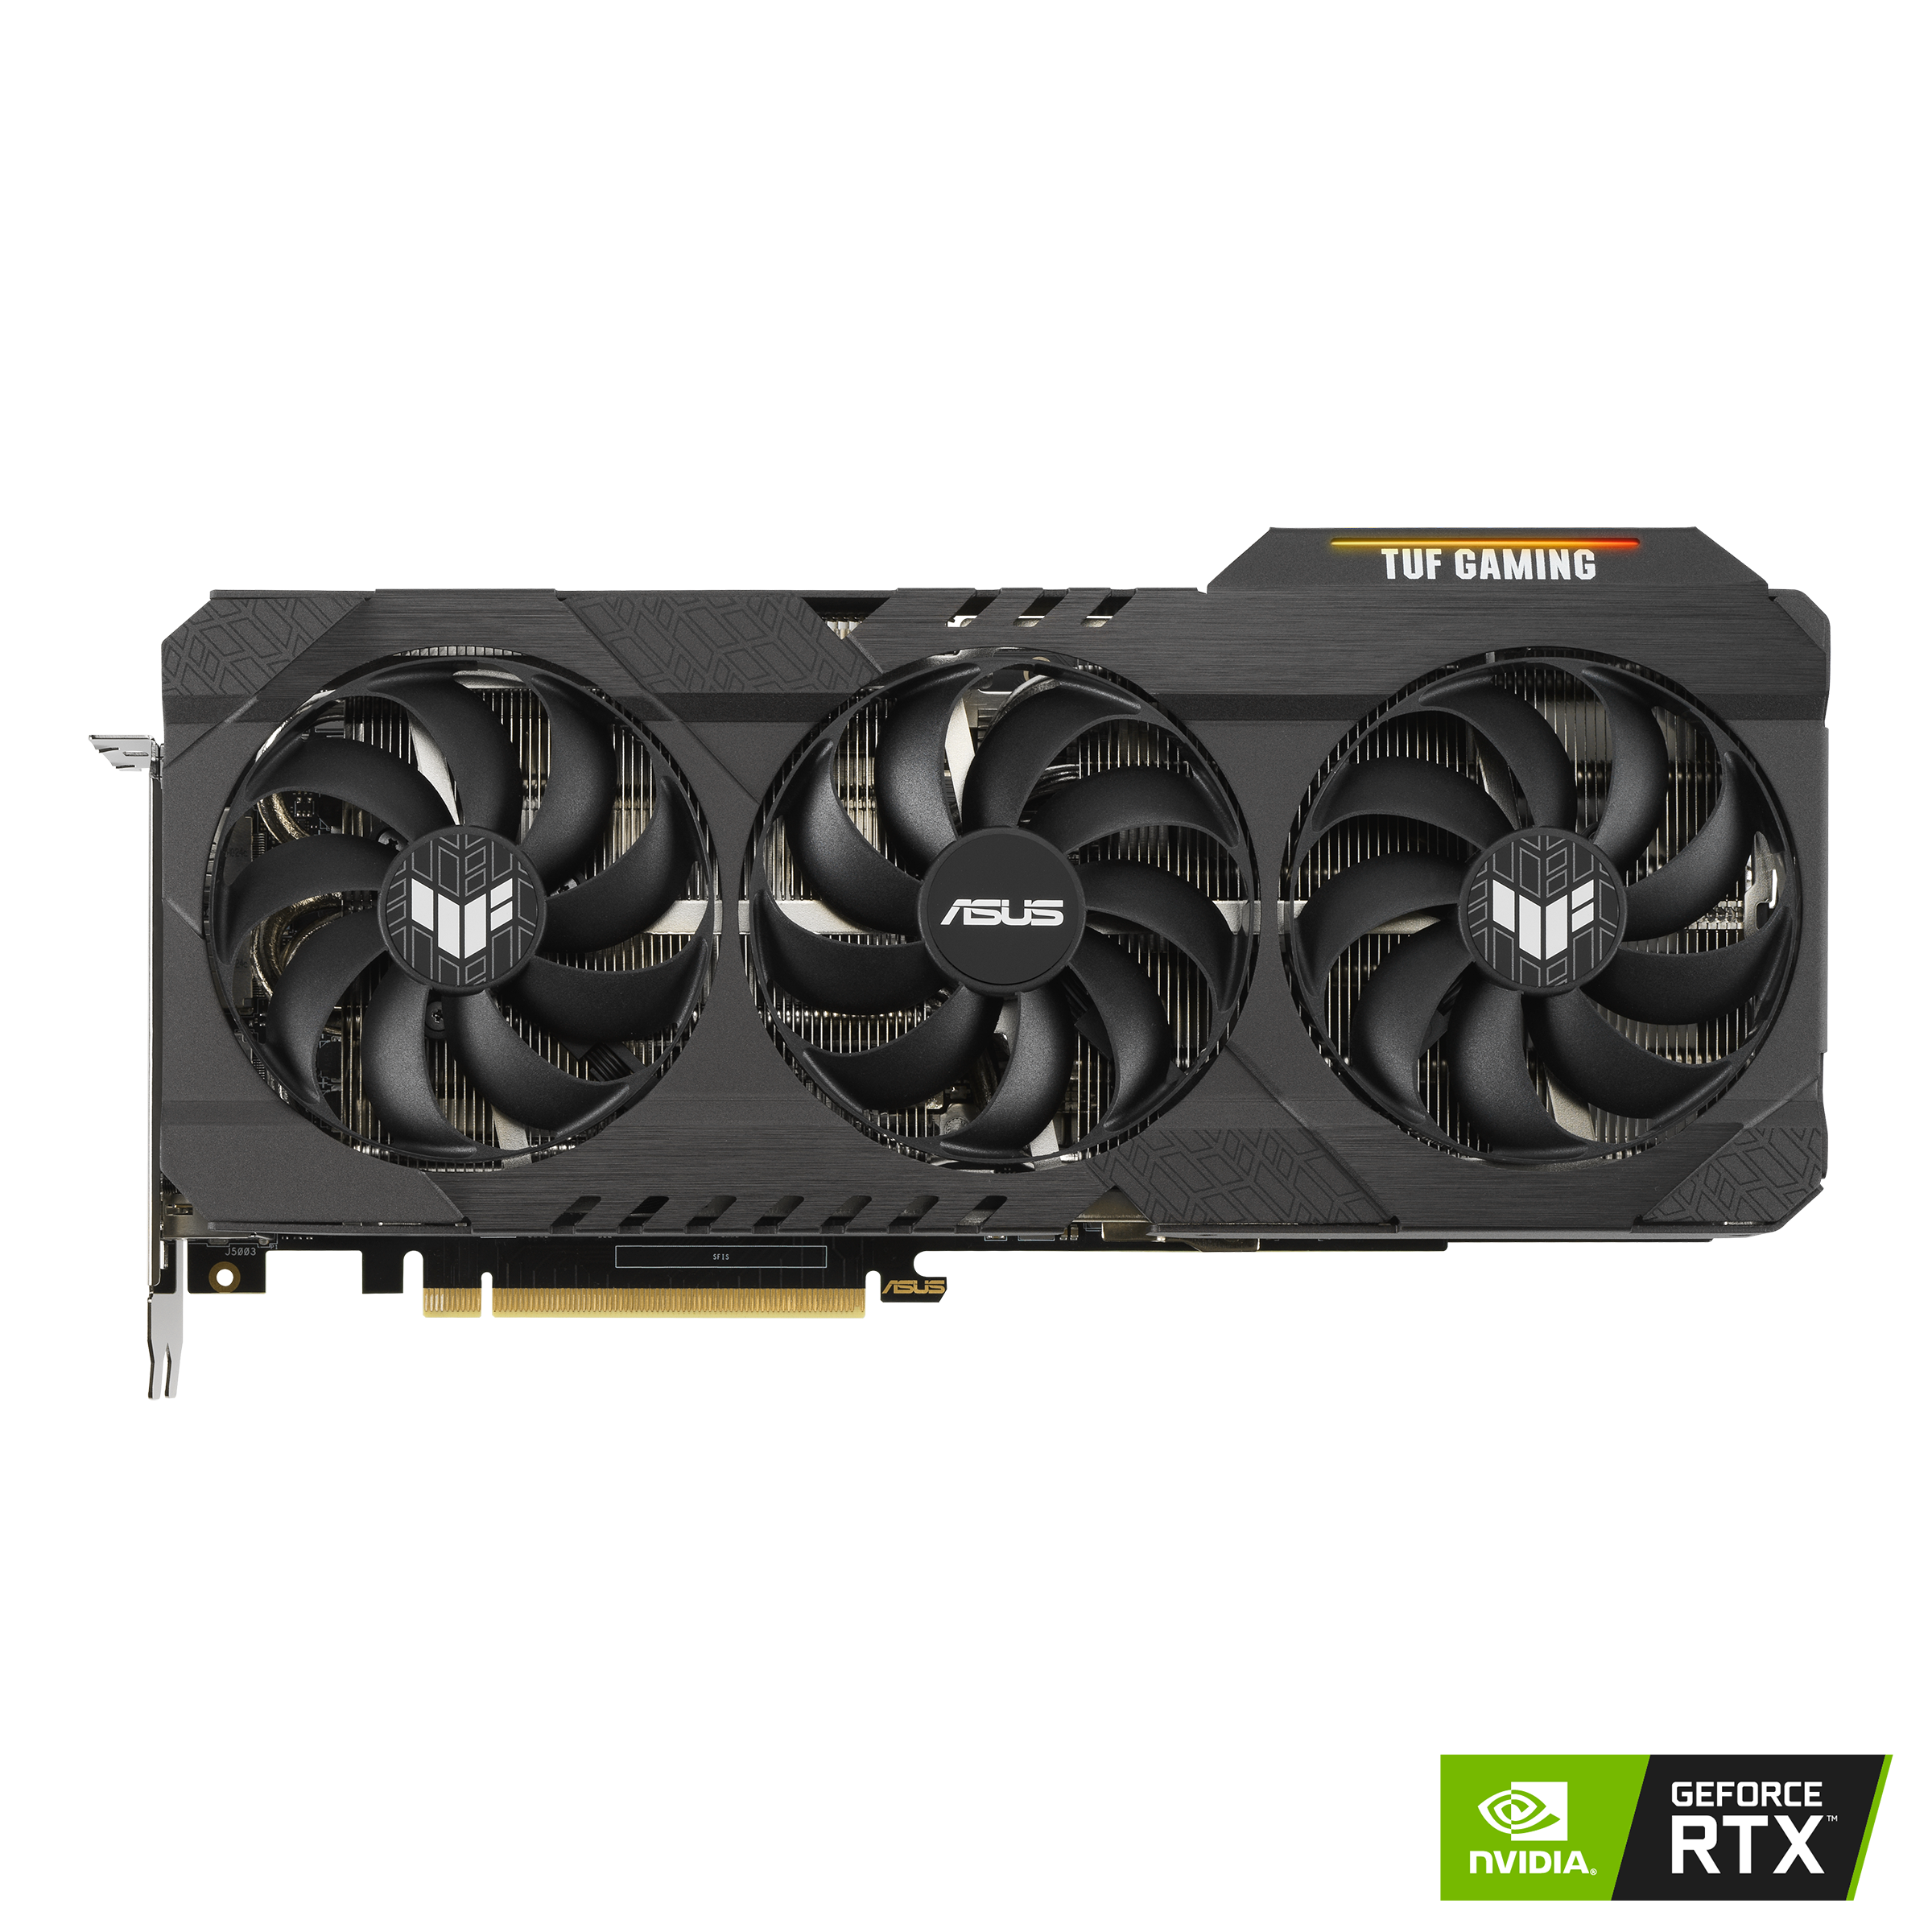 TUF Gaming GeForce RTX™ 3080 V2 10GB GDDR6X | Graphics Card